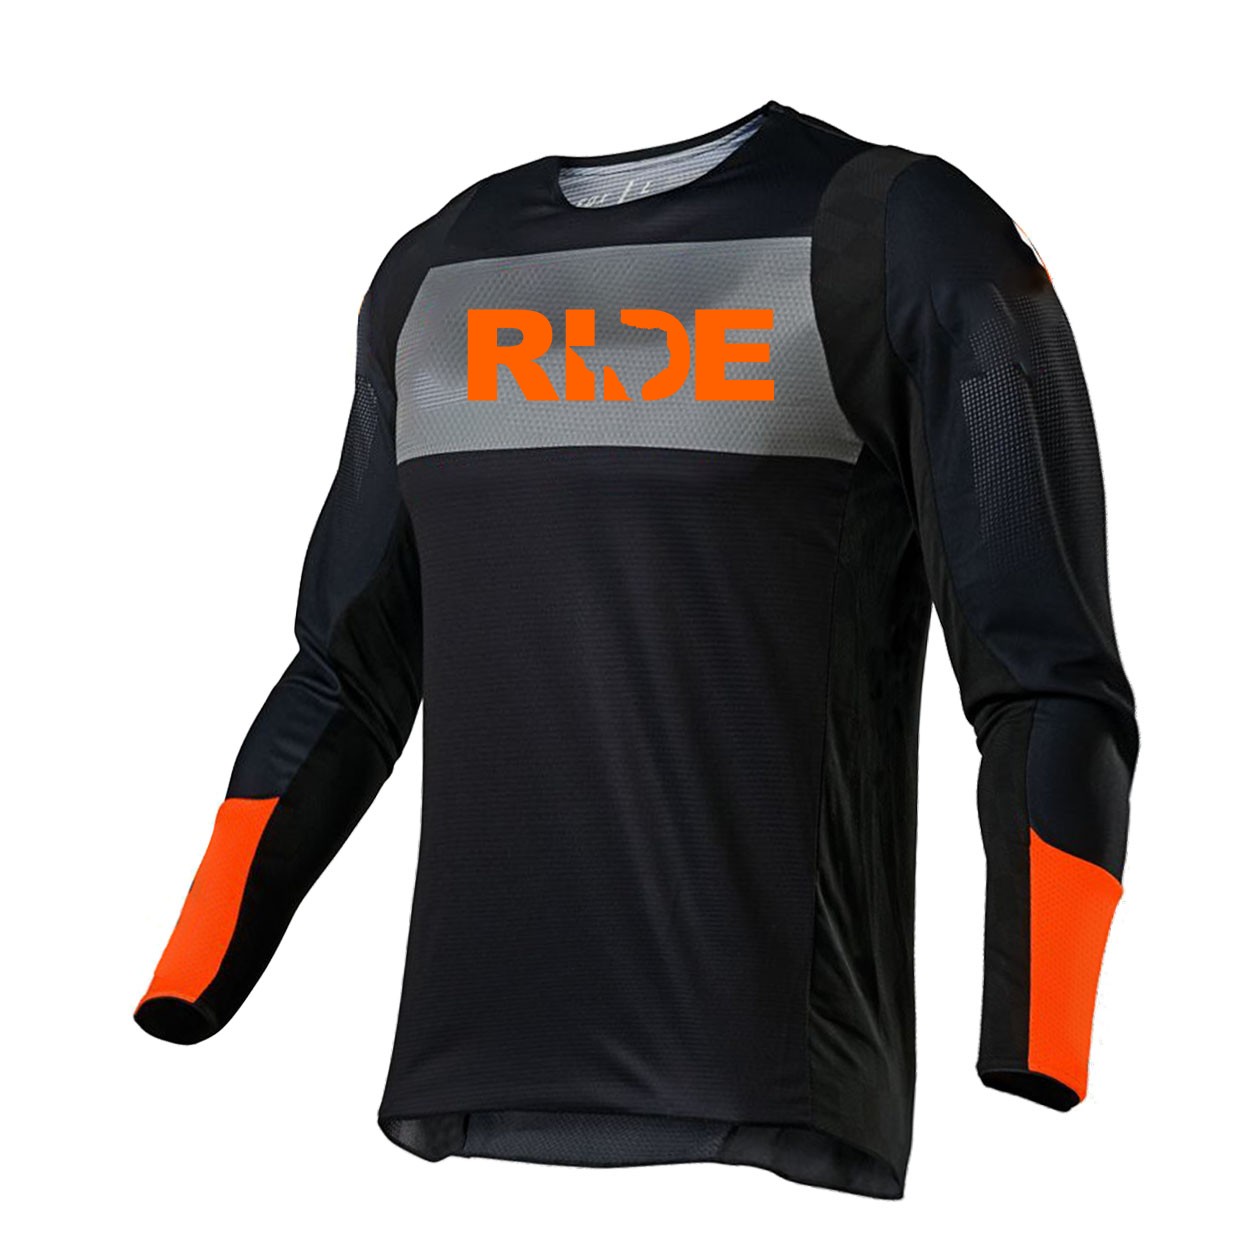 Ride Texas Classic Performance Jersey Long Sleeve Shirt Black/Gray/Orange (Orange Logo)